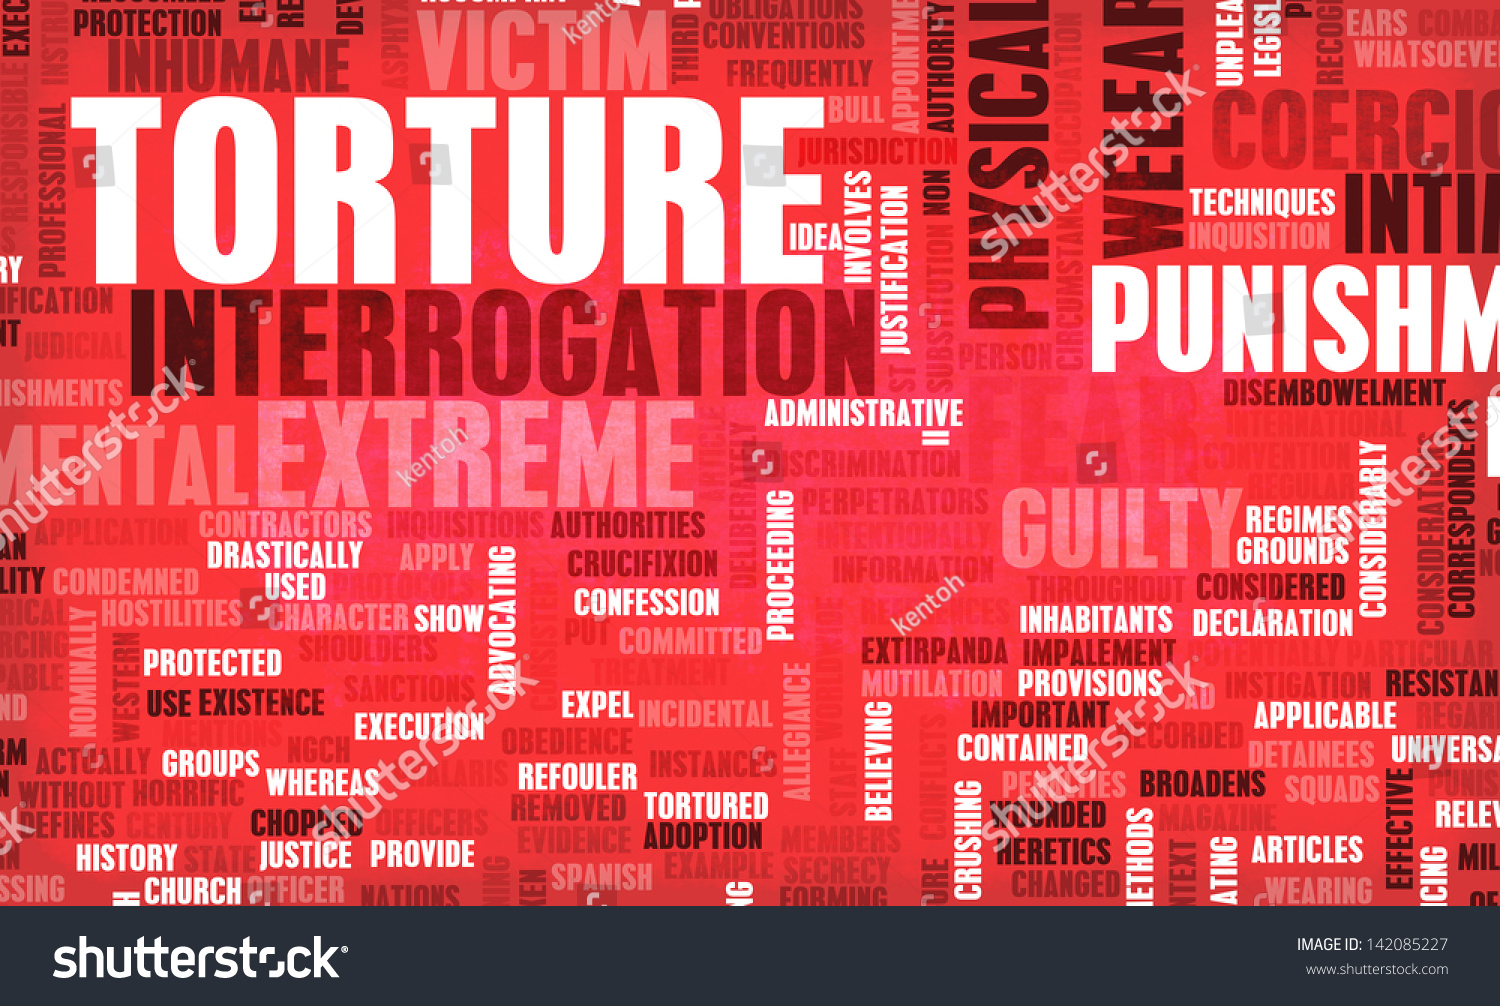 Torture Interrogation Extreme Punishment ภาพประกอบสต็อก 142085227